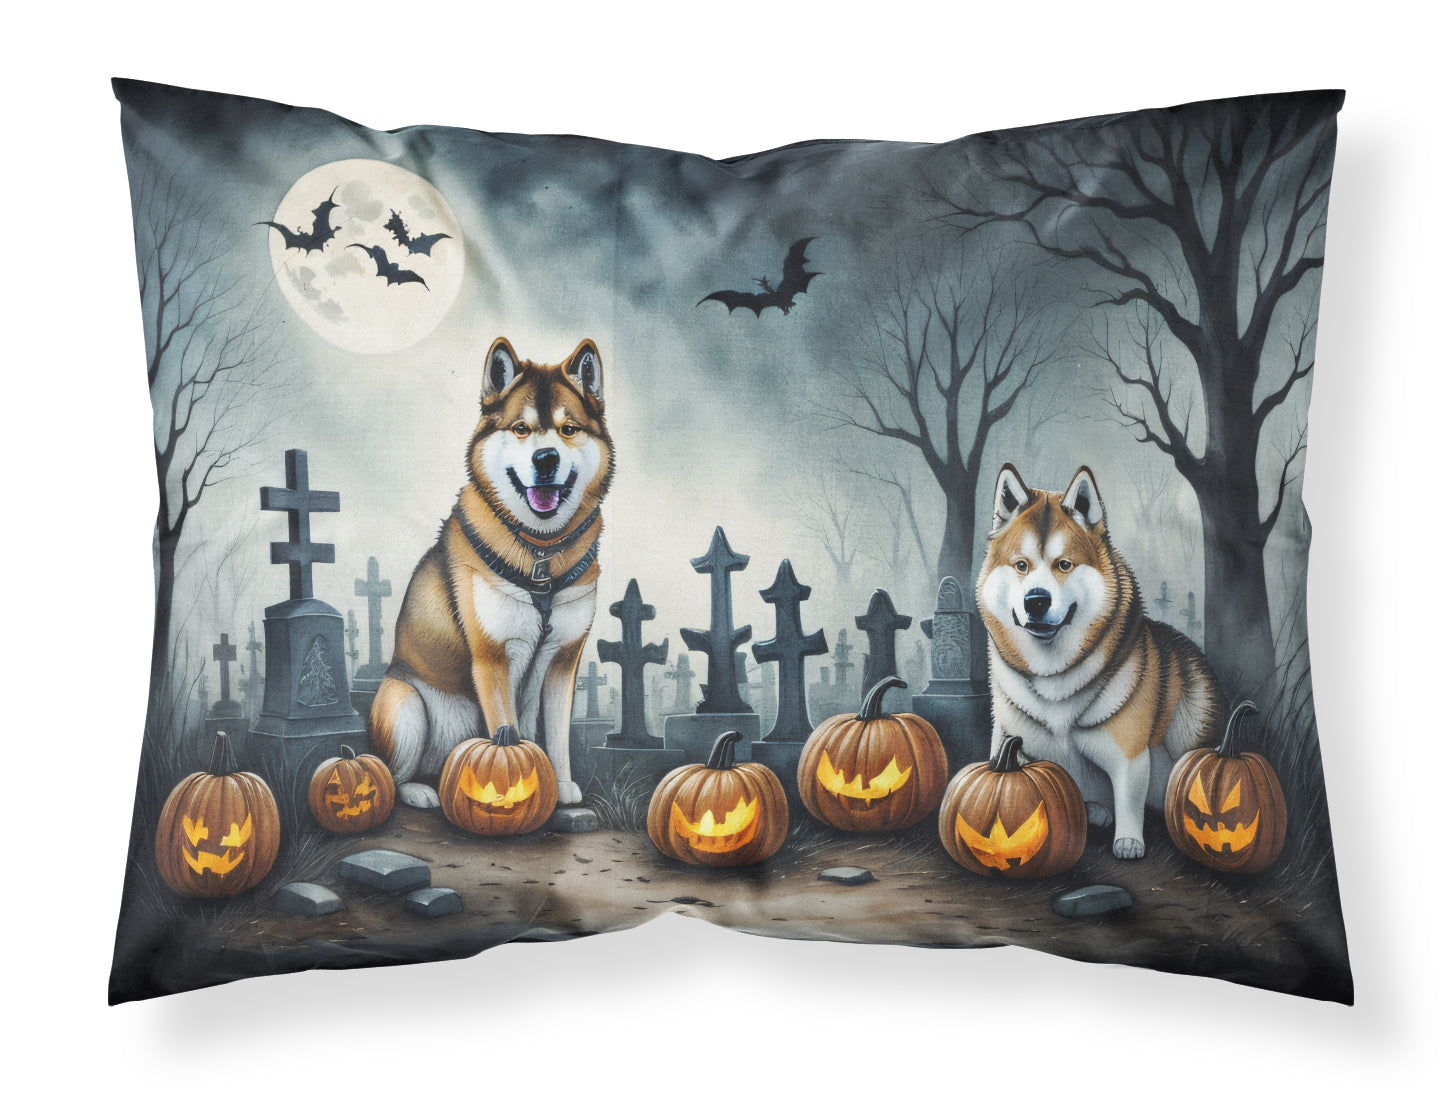 Buy this Akita Spooky Halloween Fabric Standard Pillowcase